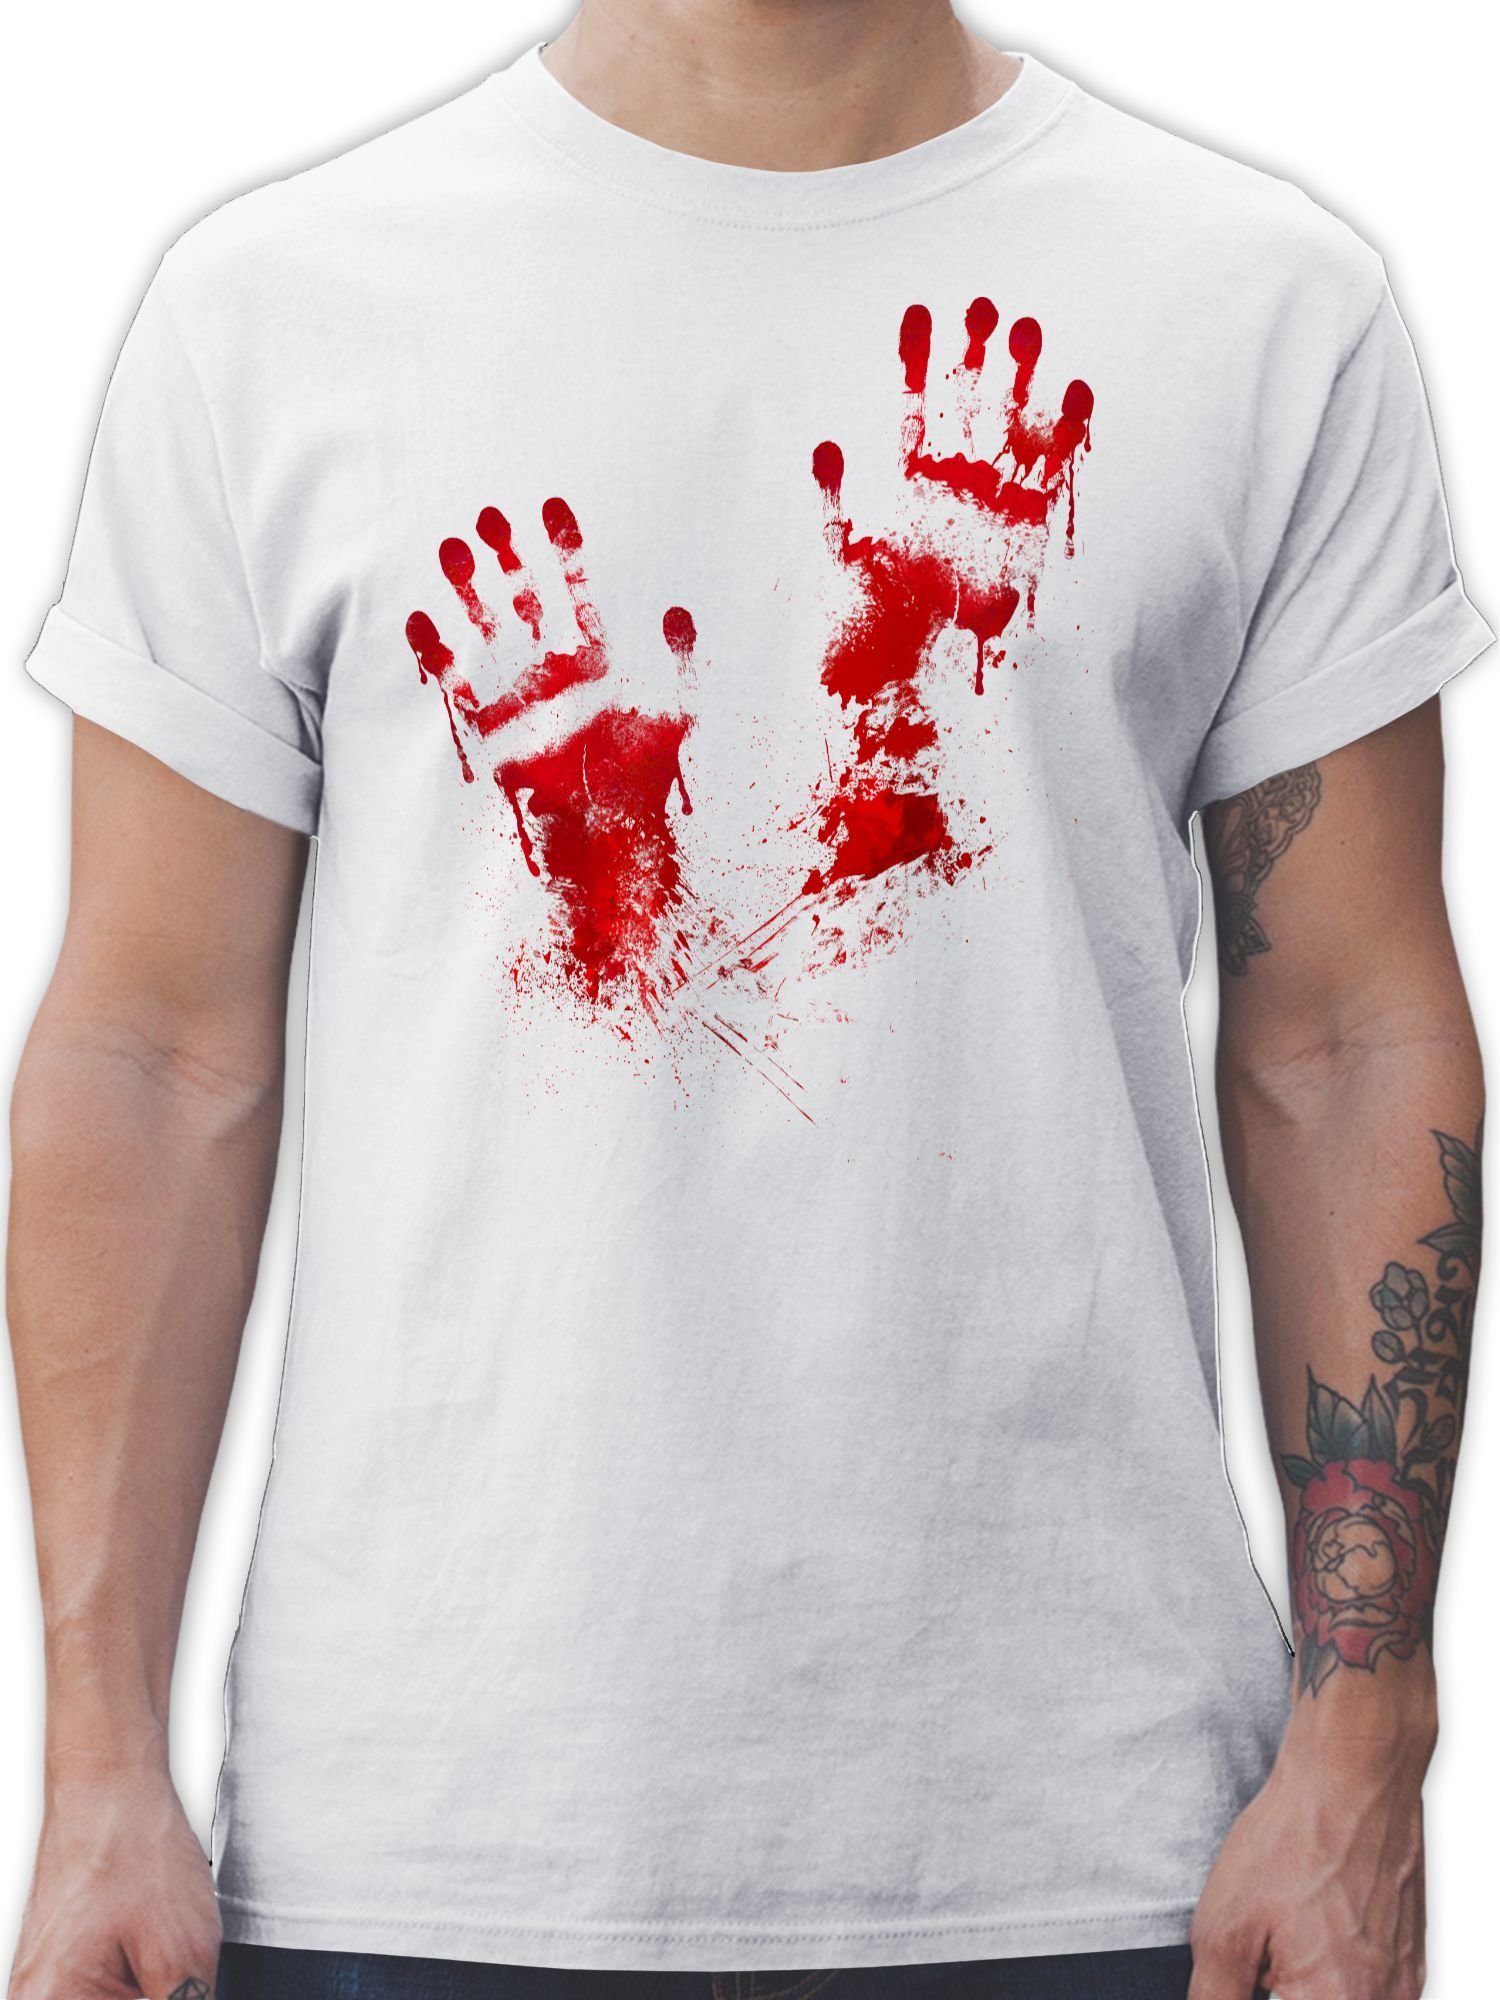 Shirtracer Herren Gruselig Blutige Halloween Kostüme Weiß T-Shirt Handabdruck 02 Blut Handabdrücke